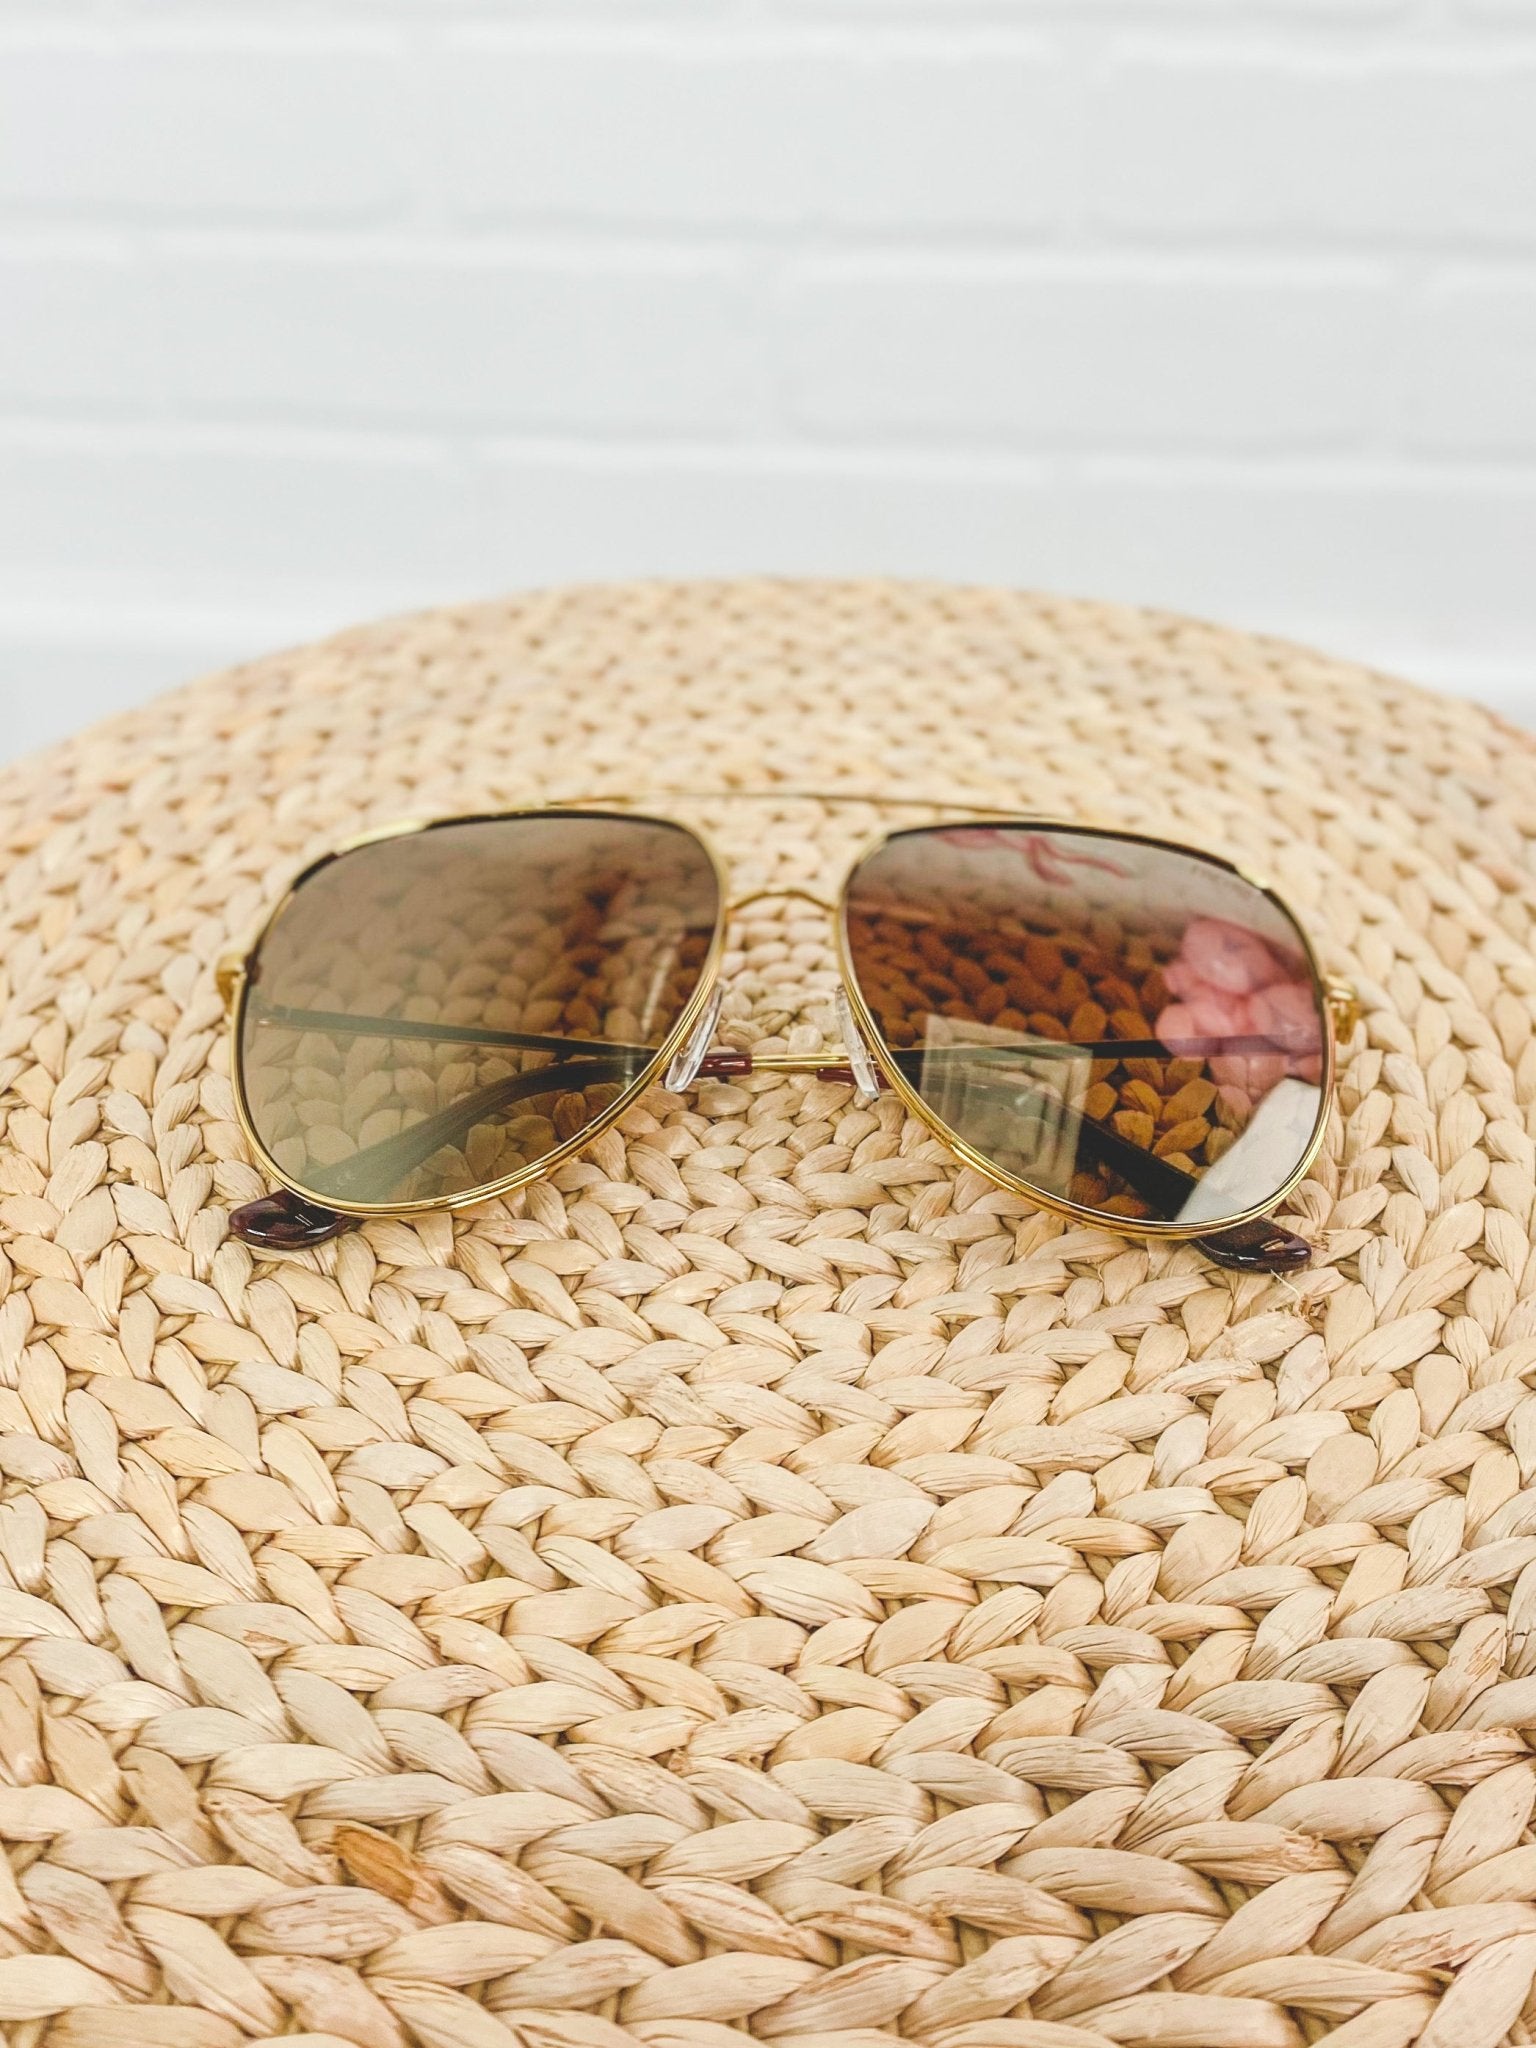 Freyrs Max sunglasses gold mirror - Cute Sunglasses - Fun Wayfarers at Lush Fashion Lounge Boutique in Oklahoma